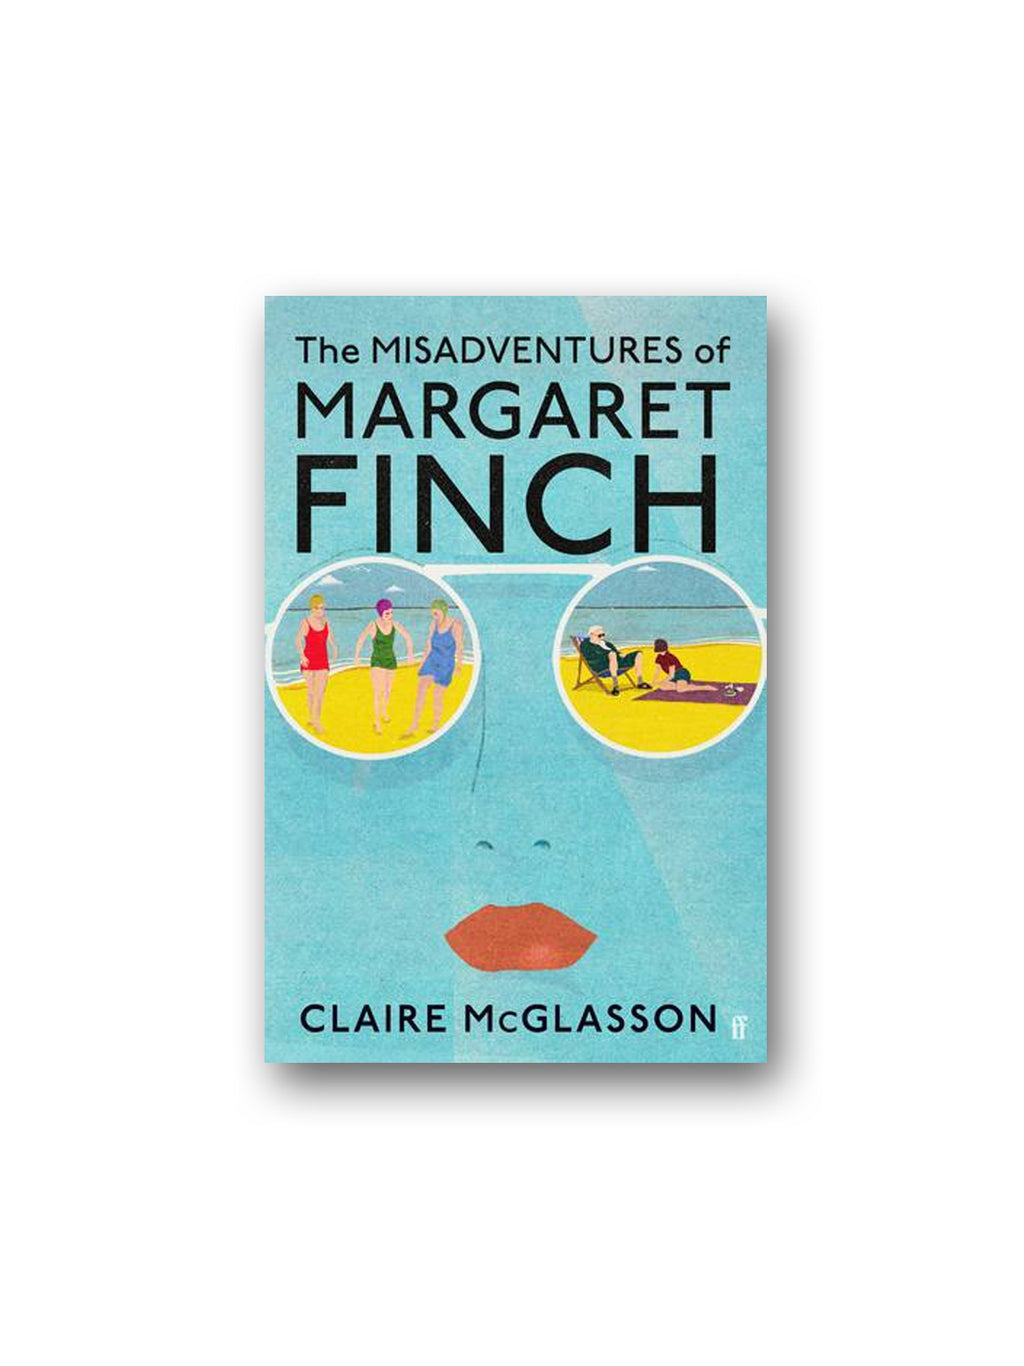 The Misadventures of Margaret Finch